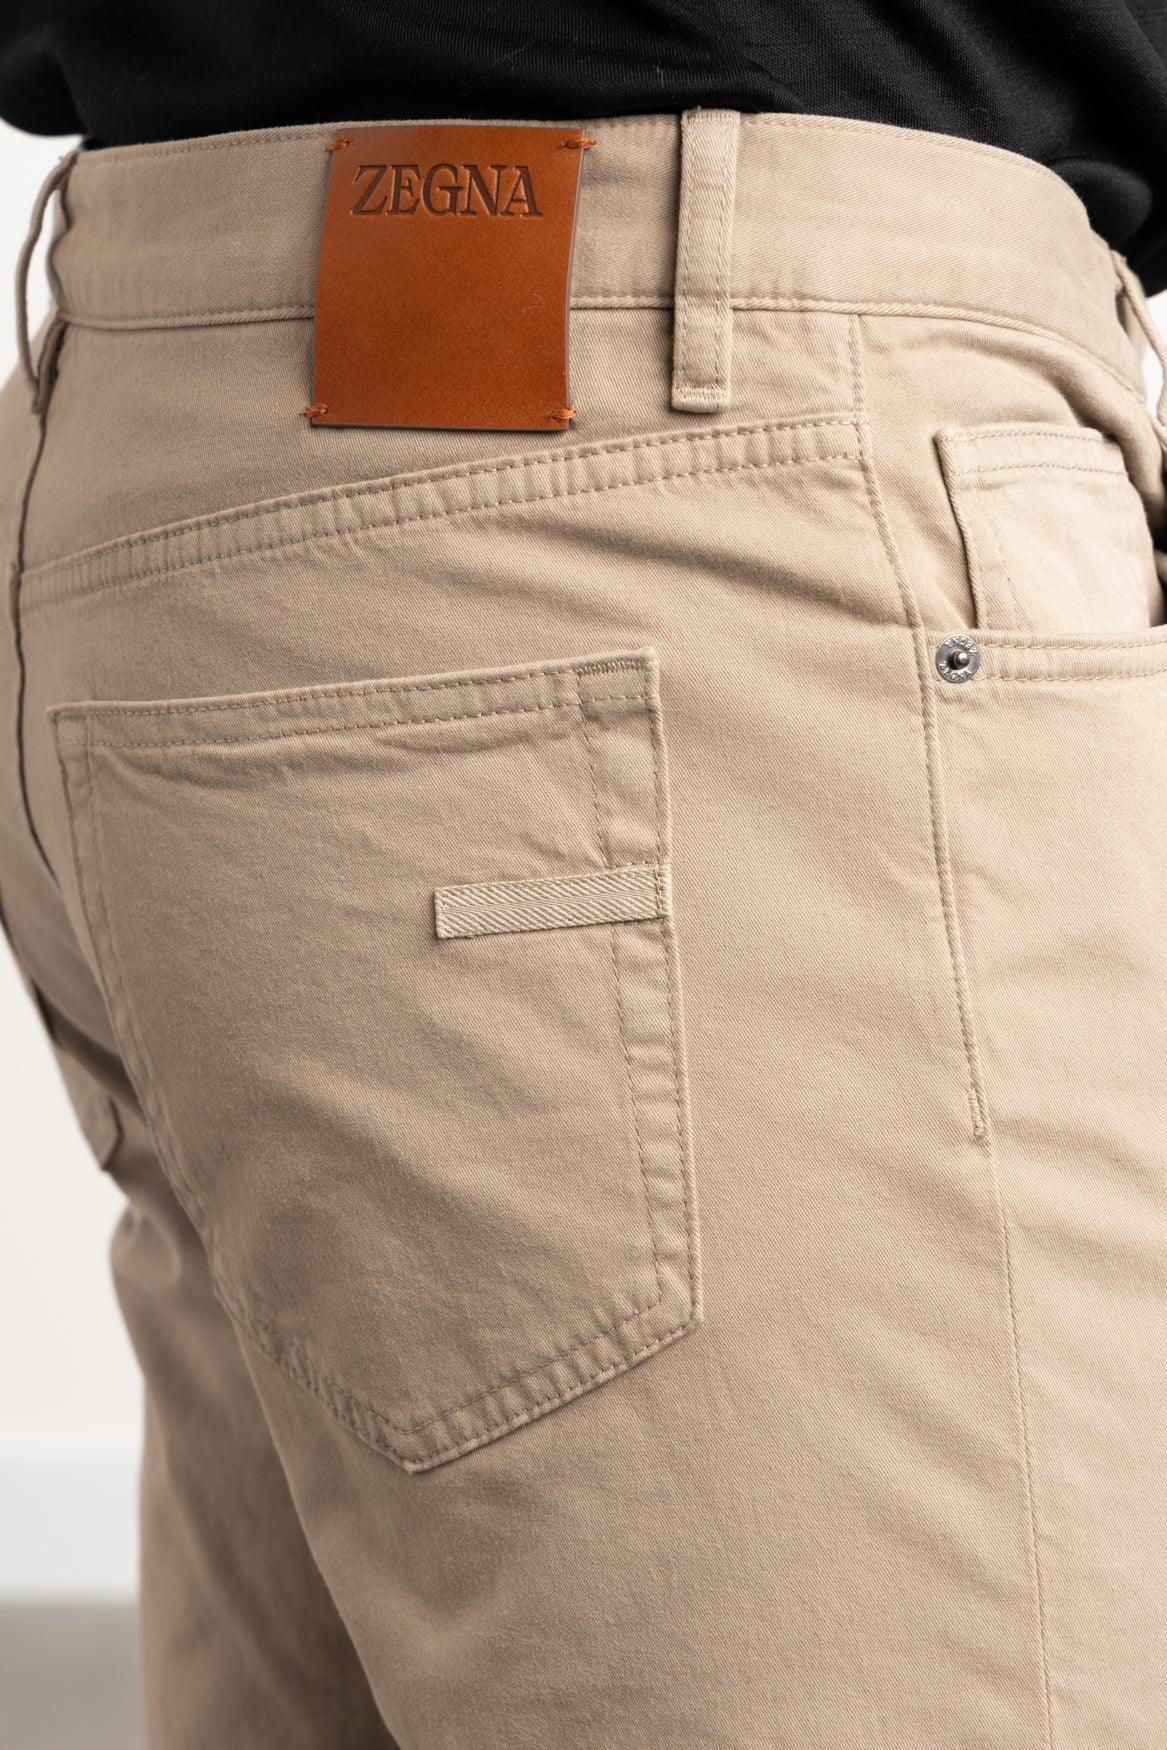 New Winter Warm Fleece Men's Jeans Thick Stretch Denim Jean Straight Trousers  Cotton Pants For Men | Wish